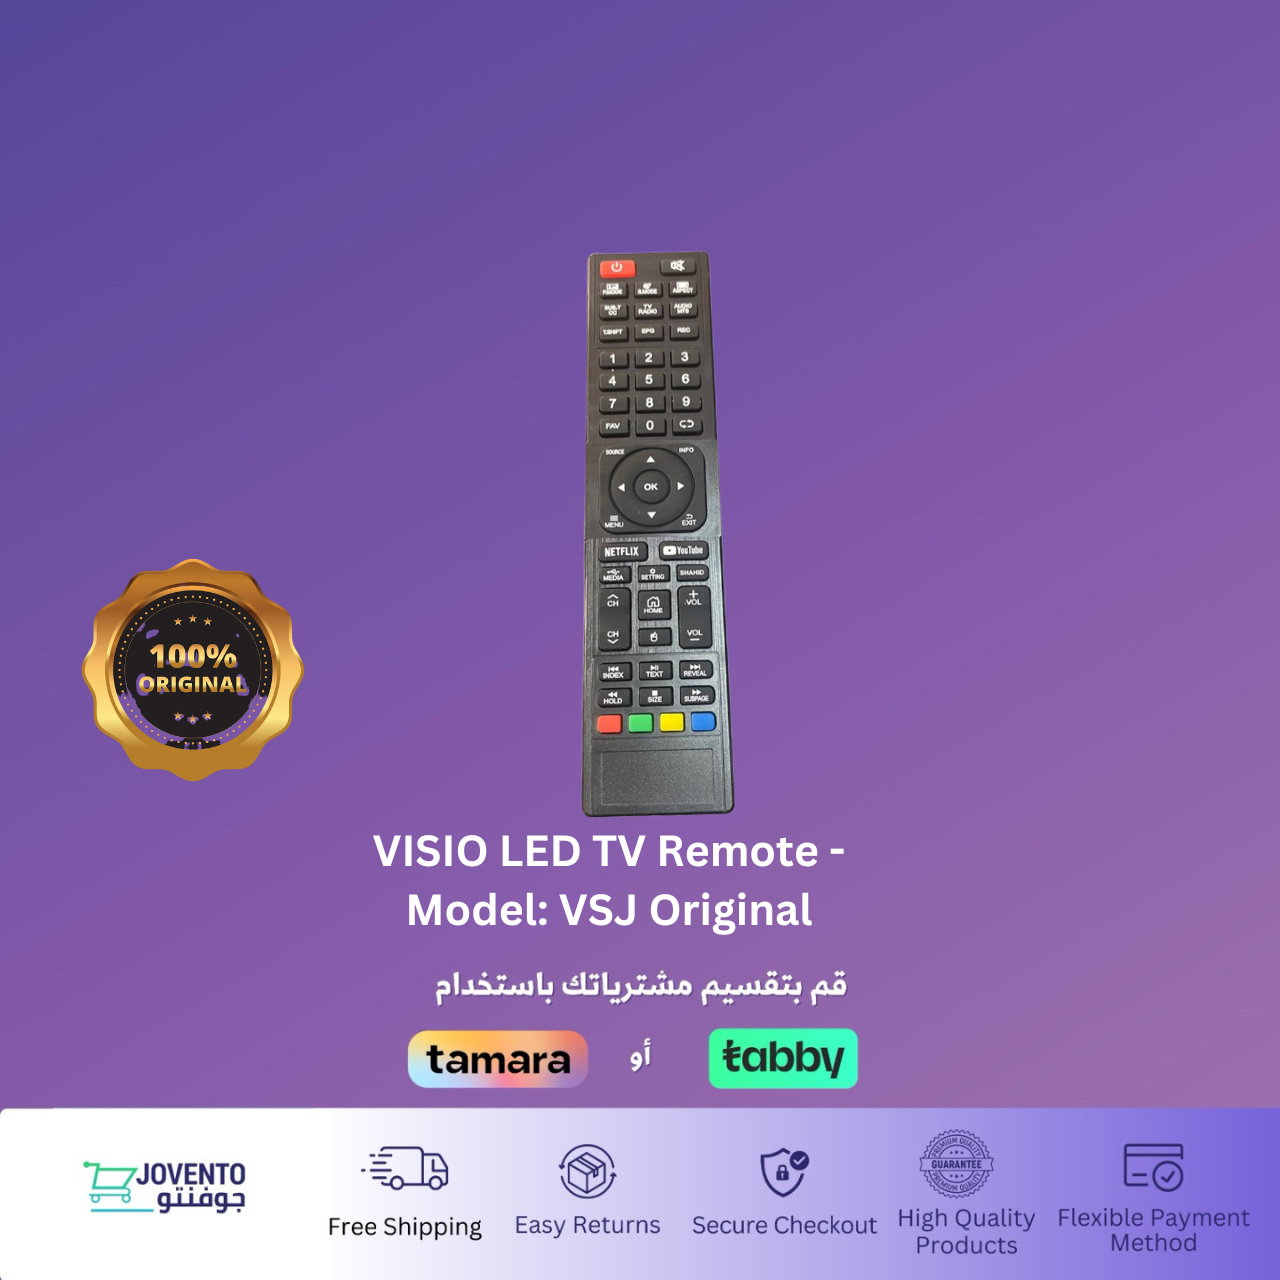 VISIO LED TV Remote - Model: VSJ Original